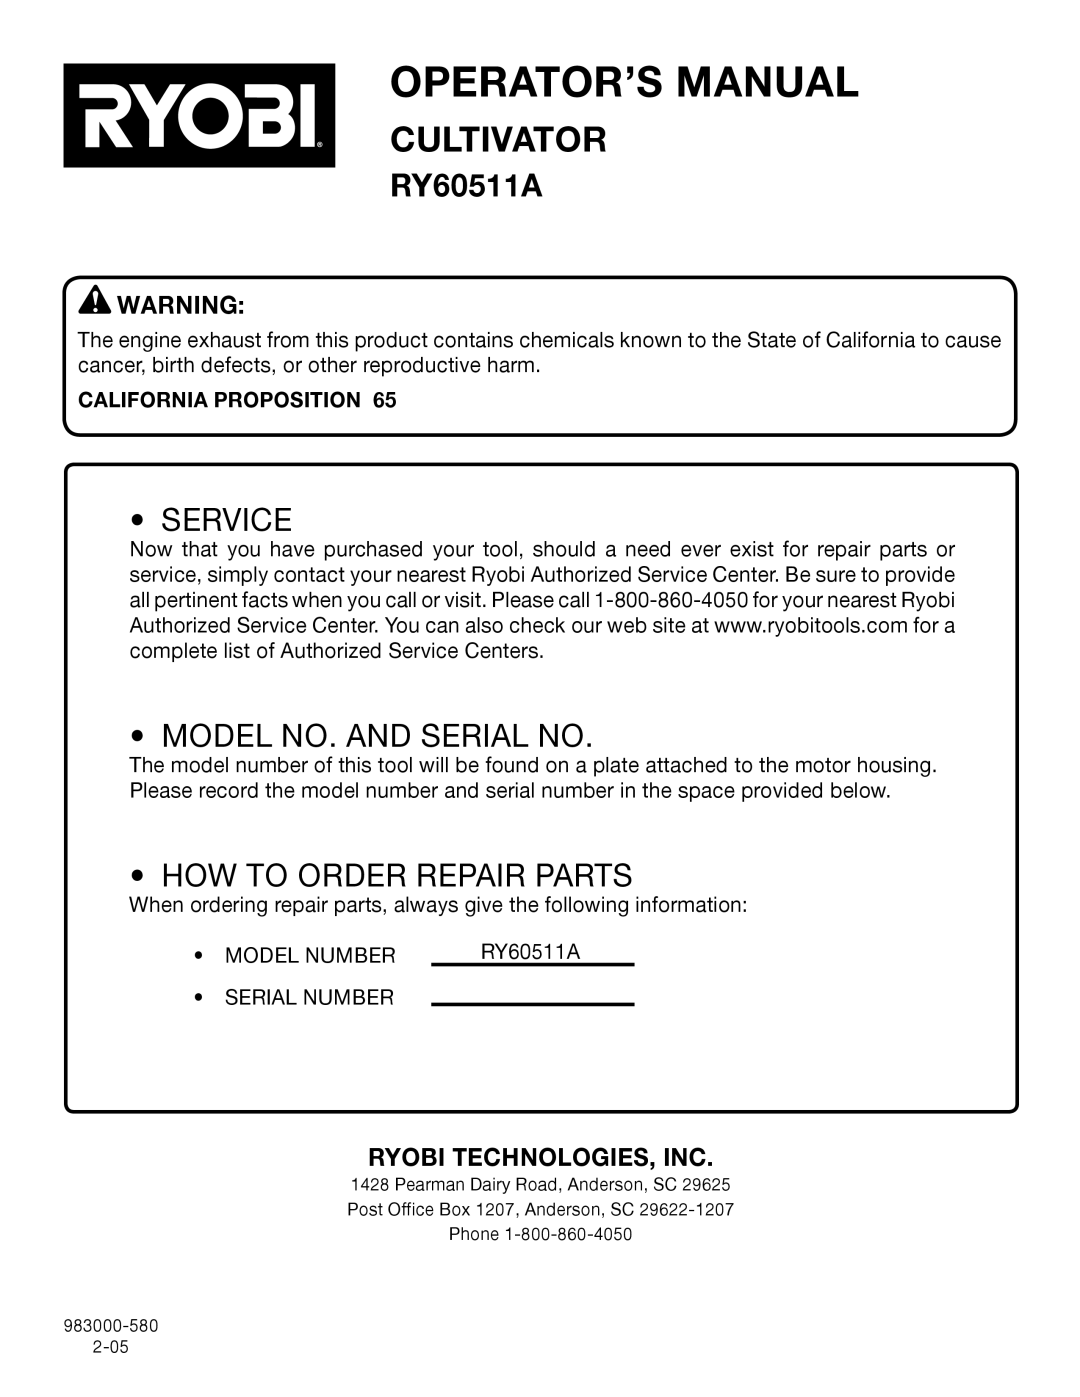 Ryobi Outdoor RY60511A manual California Proposition, Operator’S Manual, Cultivator, Service, Model No. And Serial No 